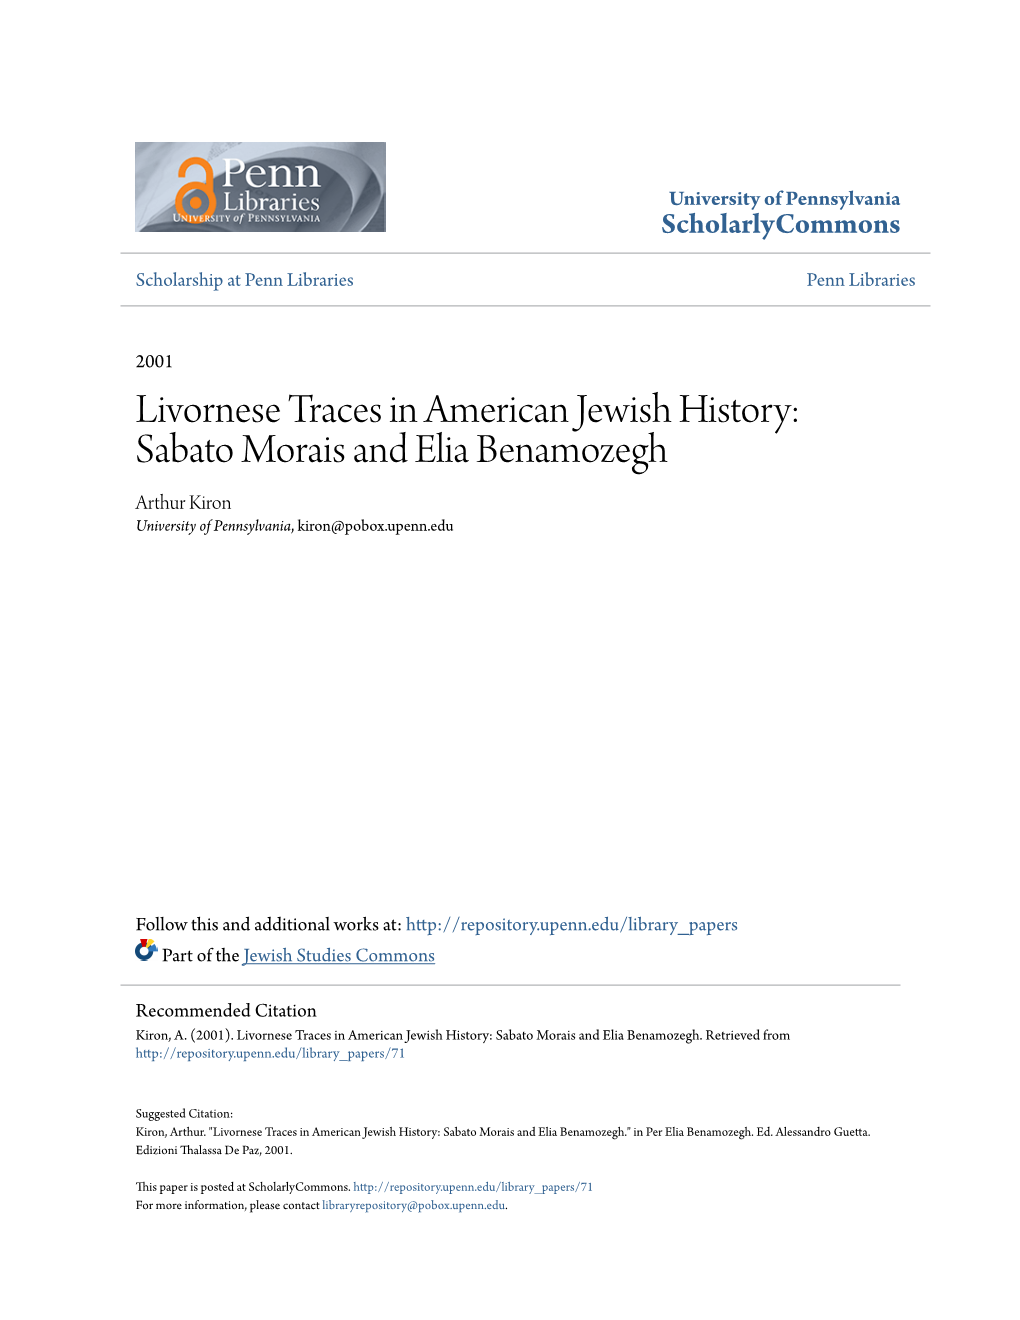 Livornese Traces in American Jewish History: Sabato Morais and Elia Benamozegh Arthur Kiron University of Pennsylvania, Kiron@Pobox.Upenn.Edu